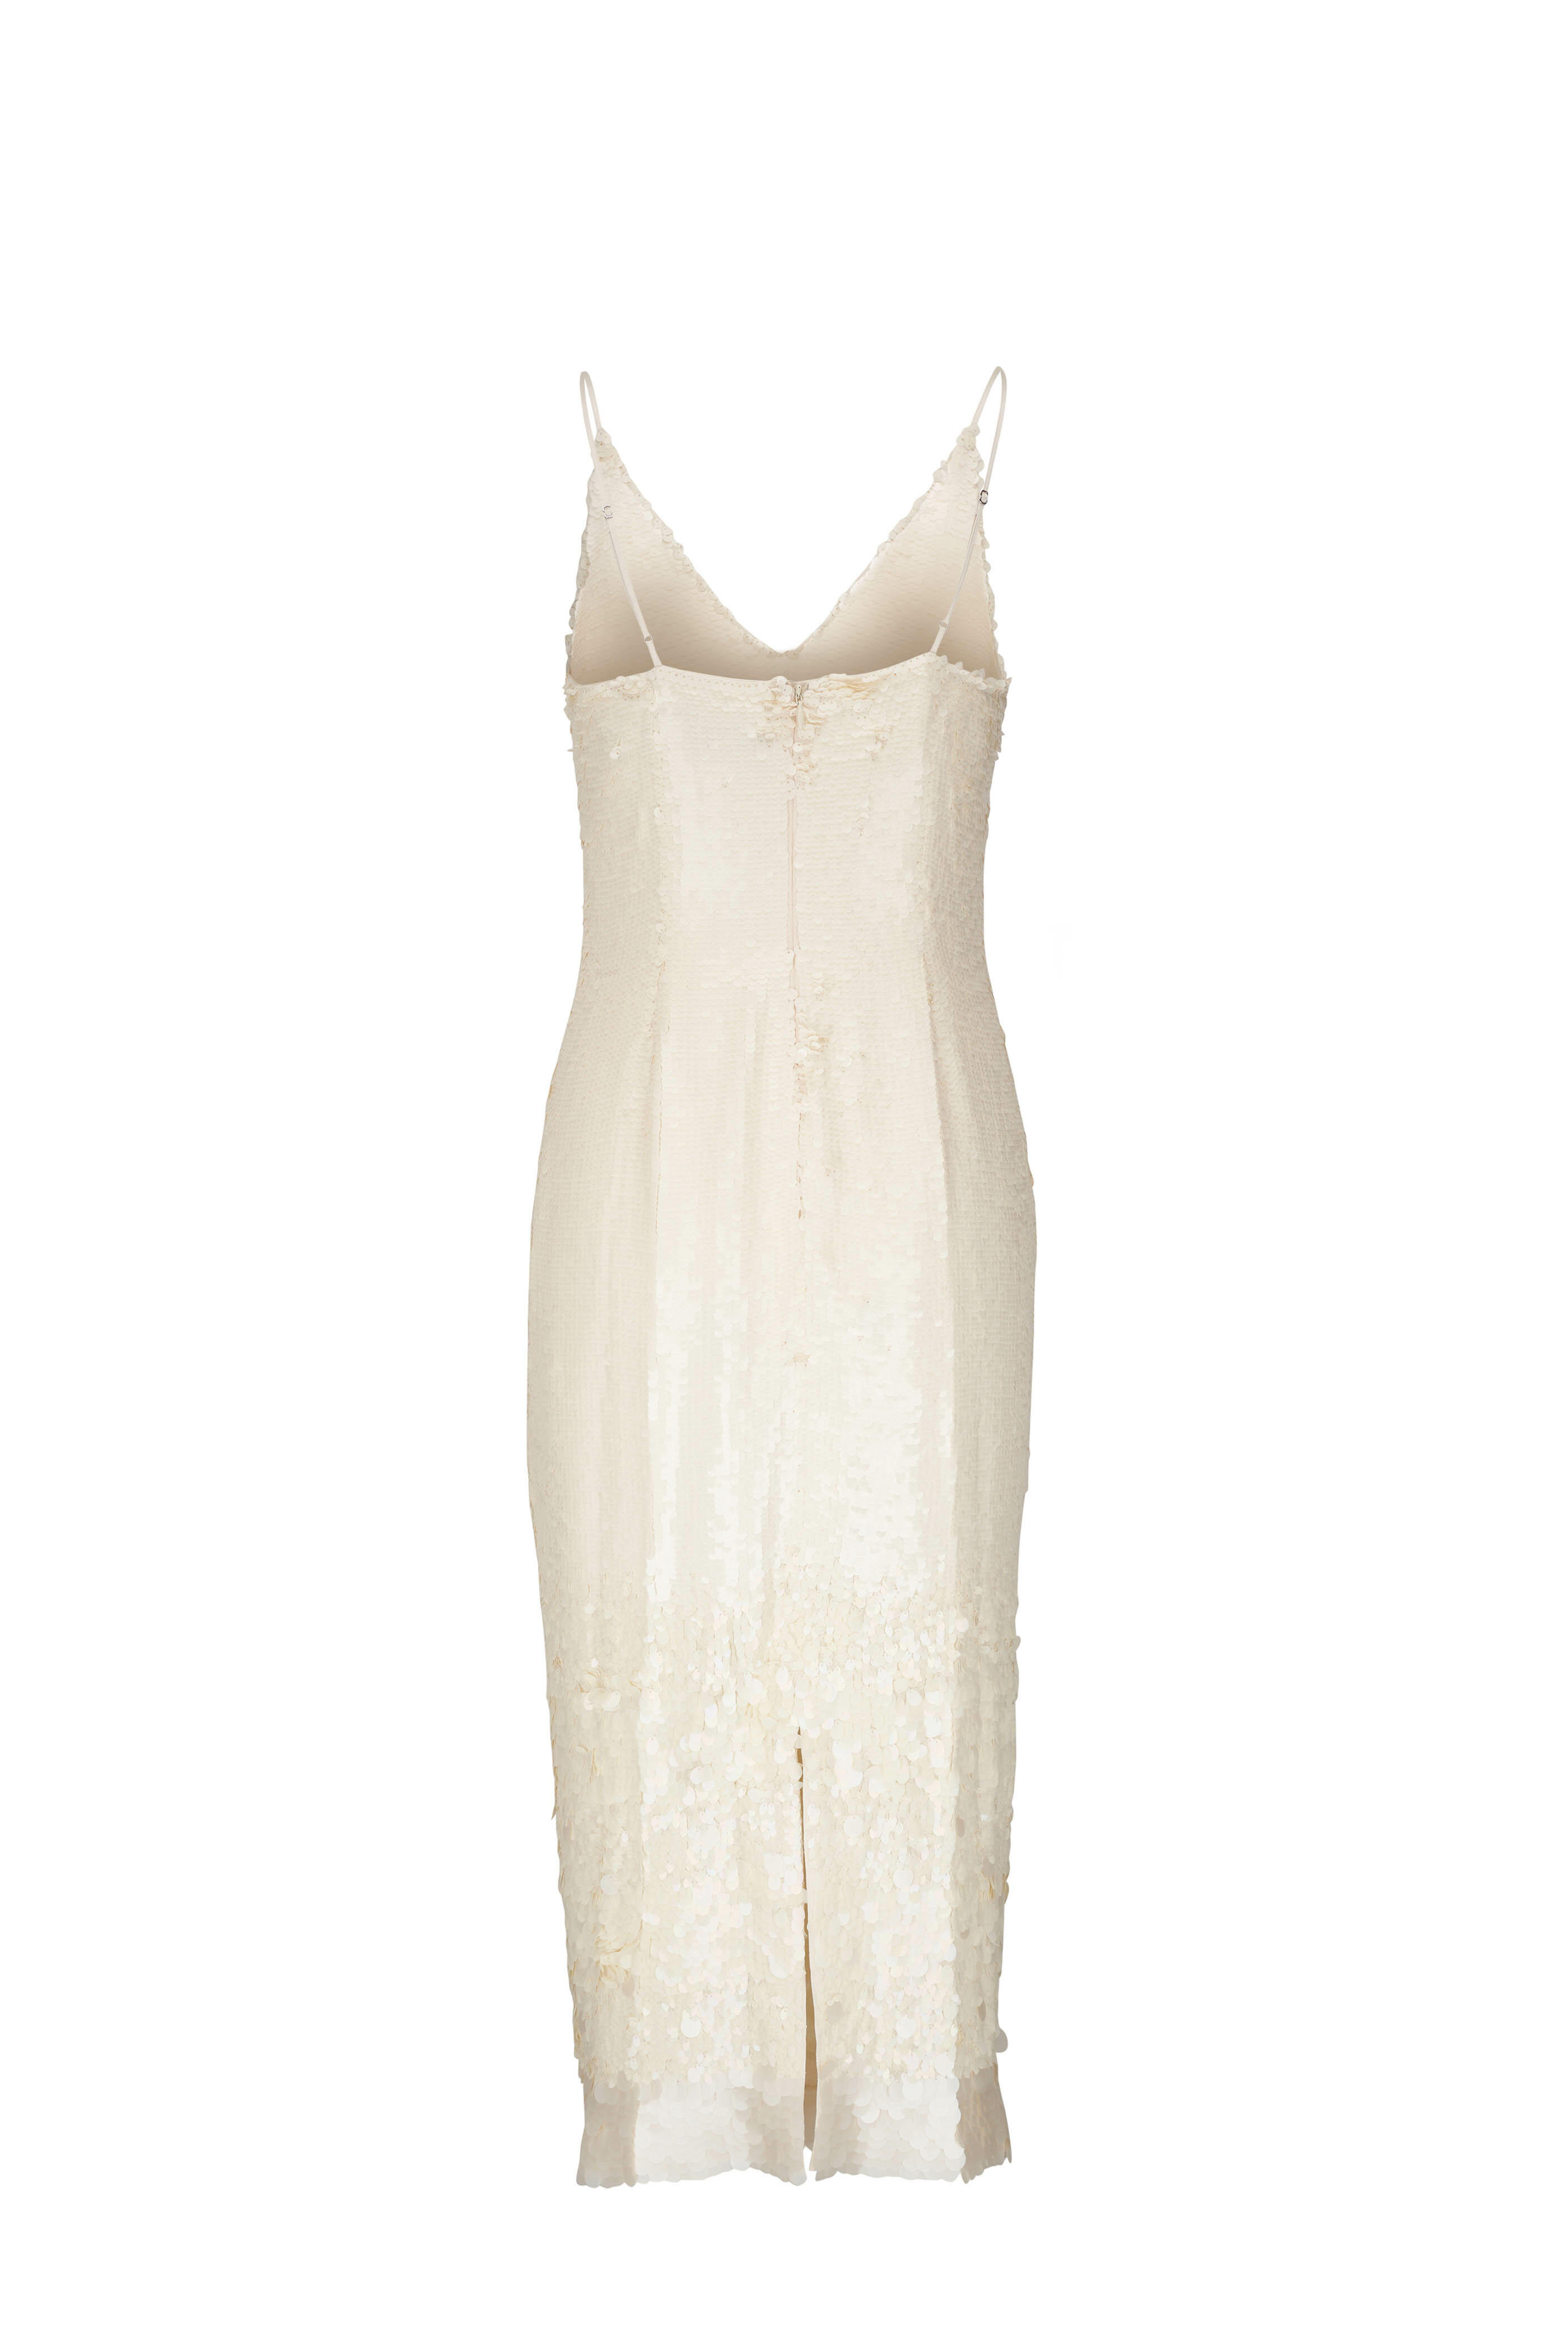 Veronica Beard - Perla Iridescent Off White Sequin Dress